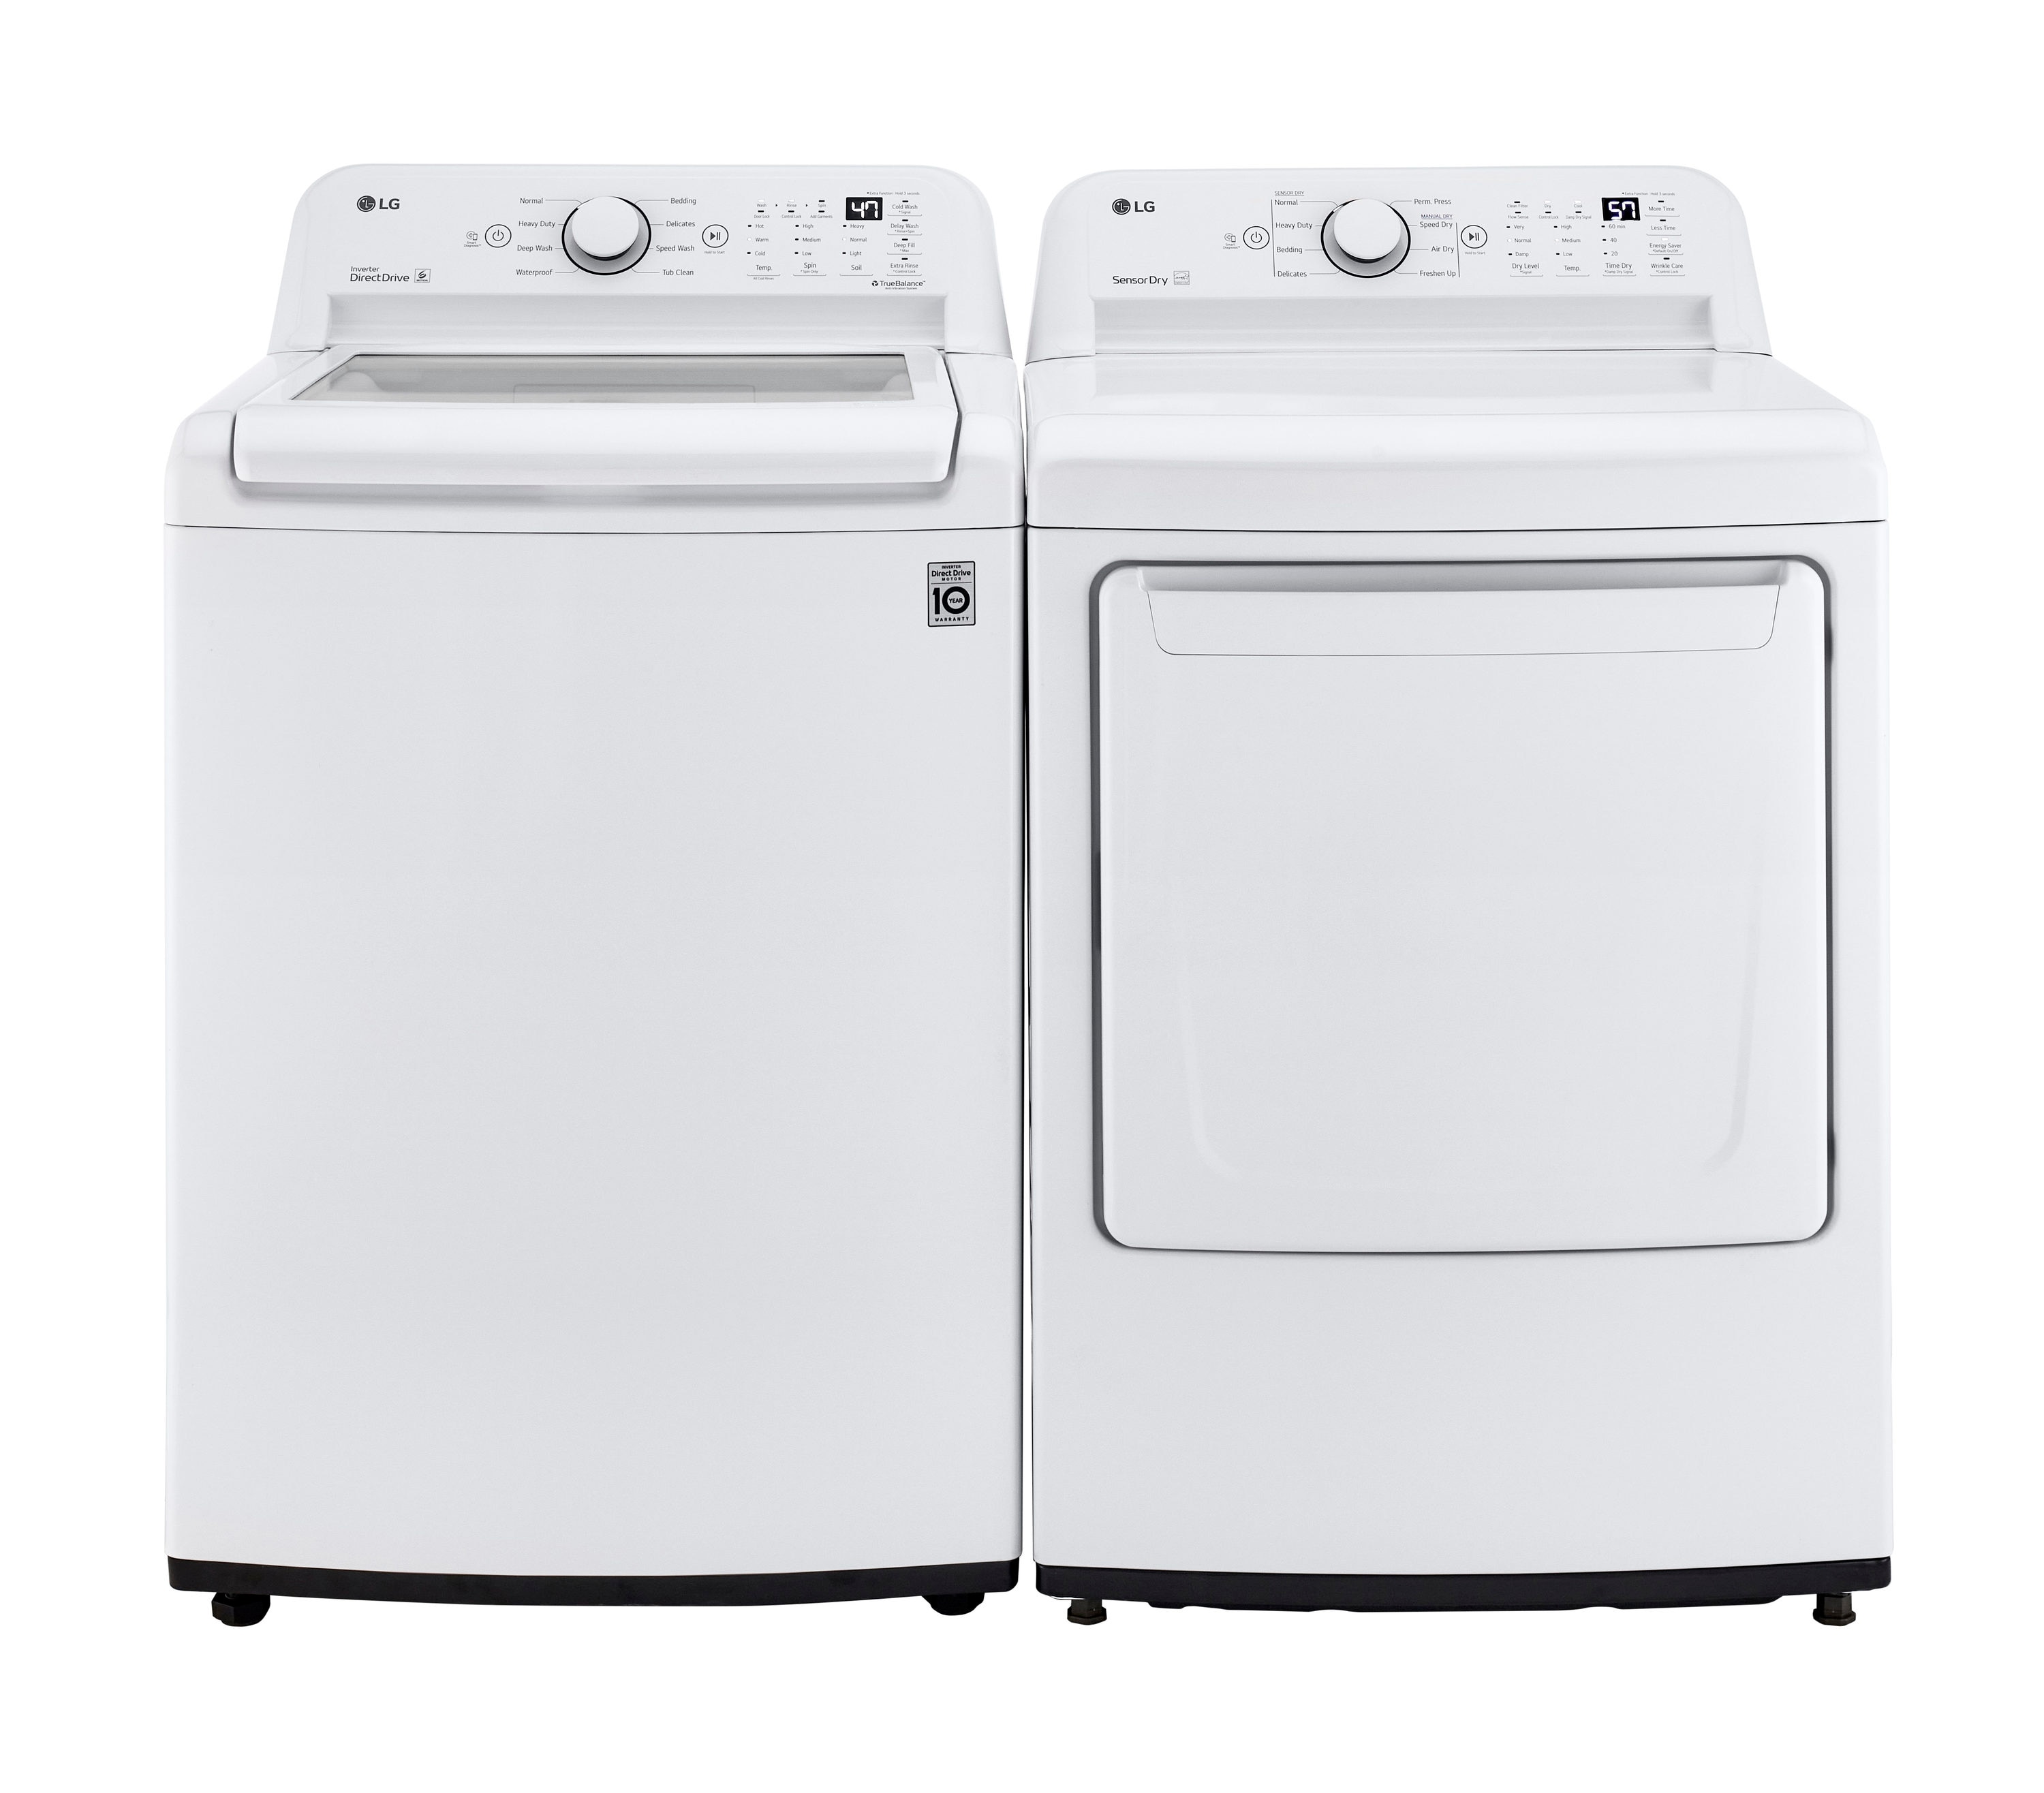 ShinsungDelta OzWind Air Fit Body Dryer Heater Function 220V KOREA WHITE  COLOR